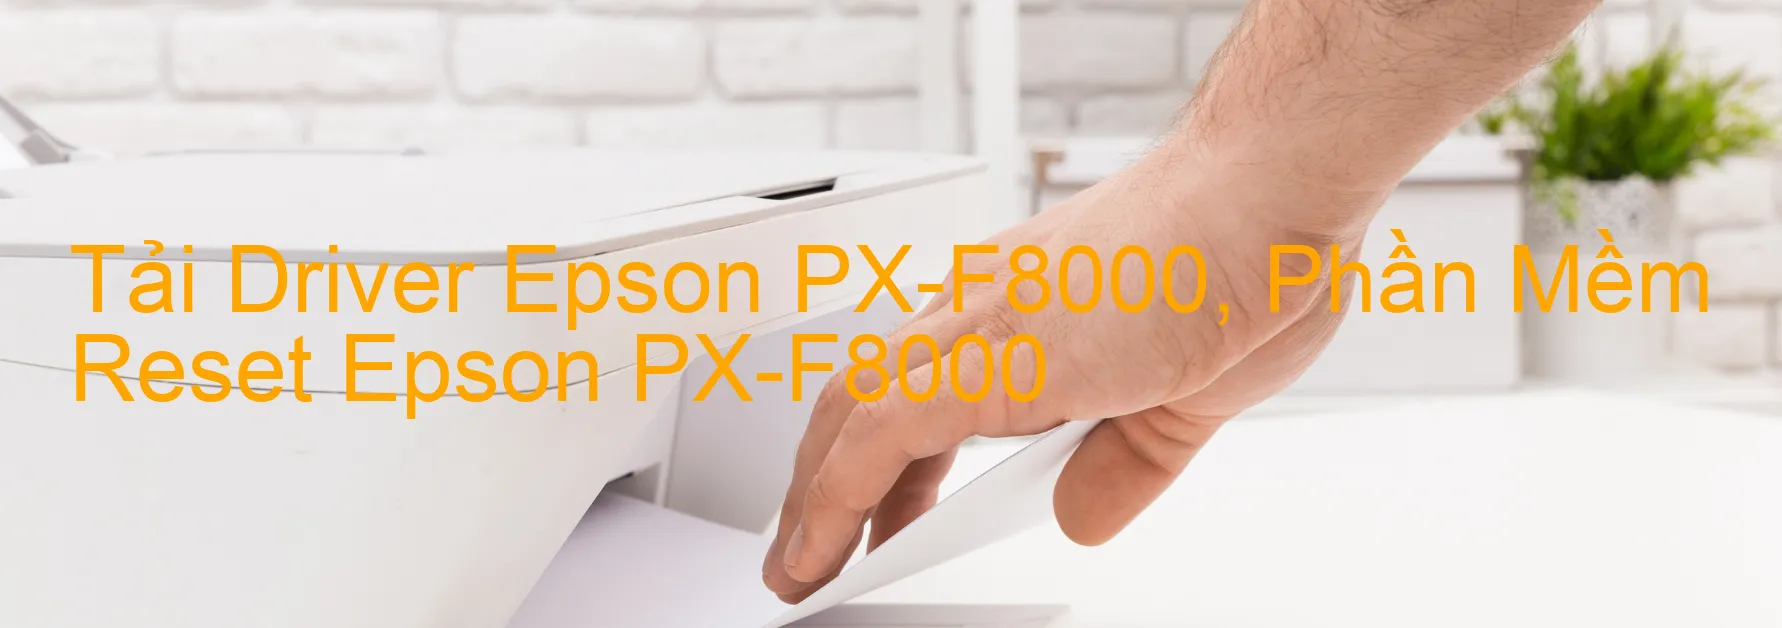 Driver Epson PX-F8000, Phần Mềm Reset Epson PX-F8000